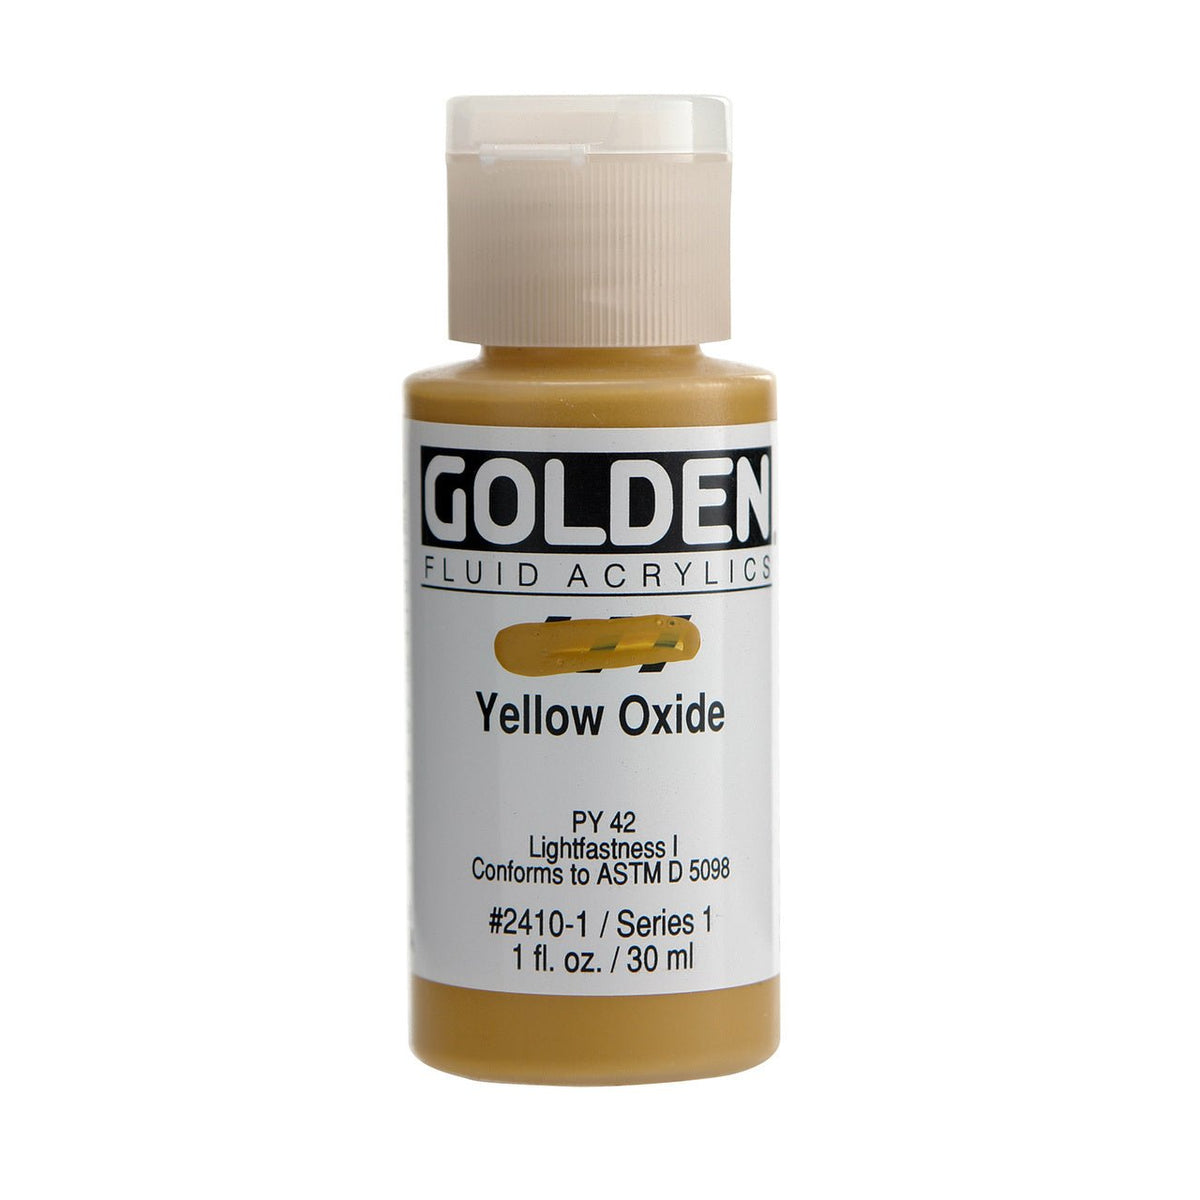 Golden Fluid Acrylic Yellow Oxide 1 oz - merriartist.com